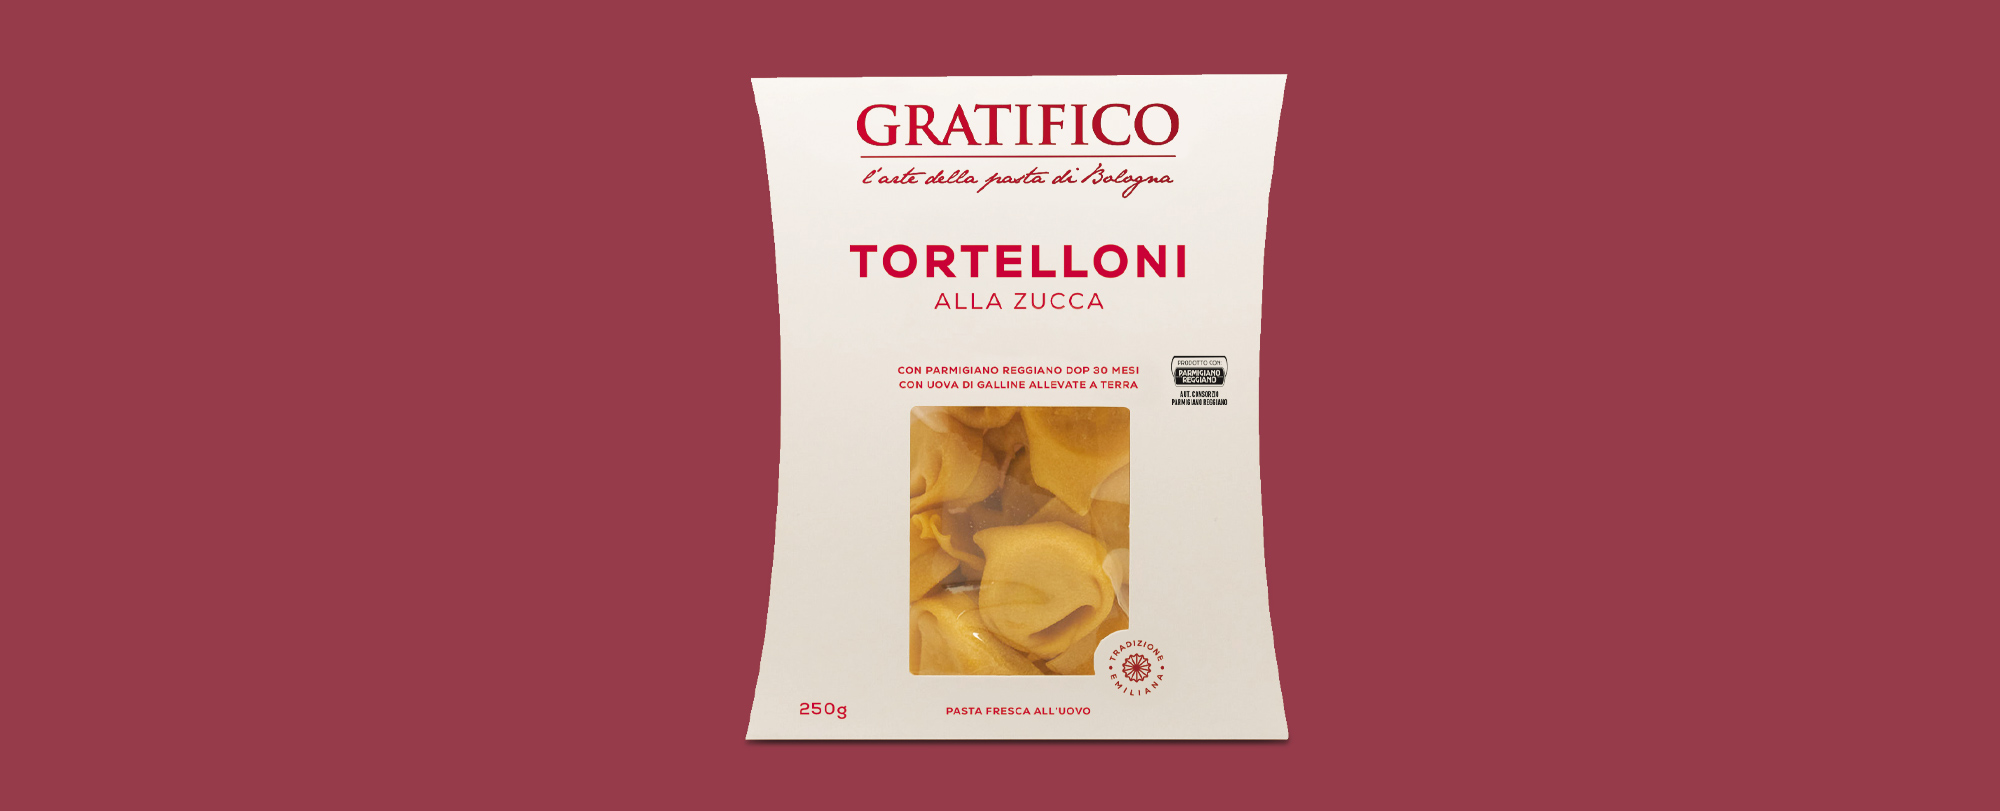 Tortelloni_-pack-mockup